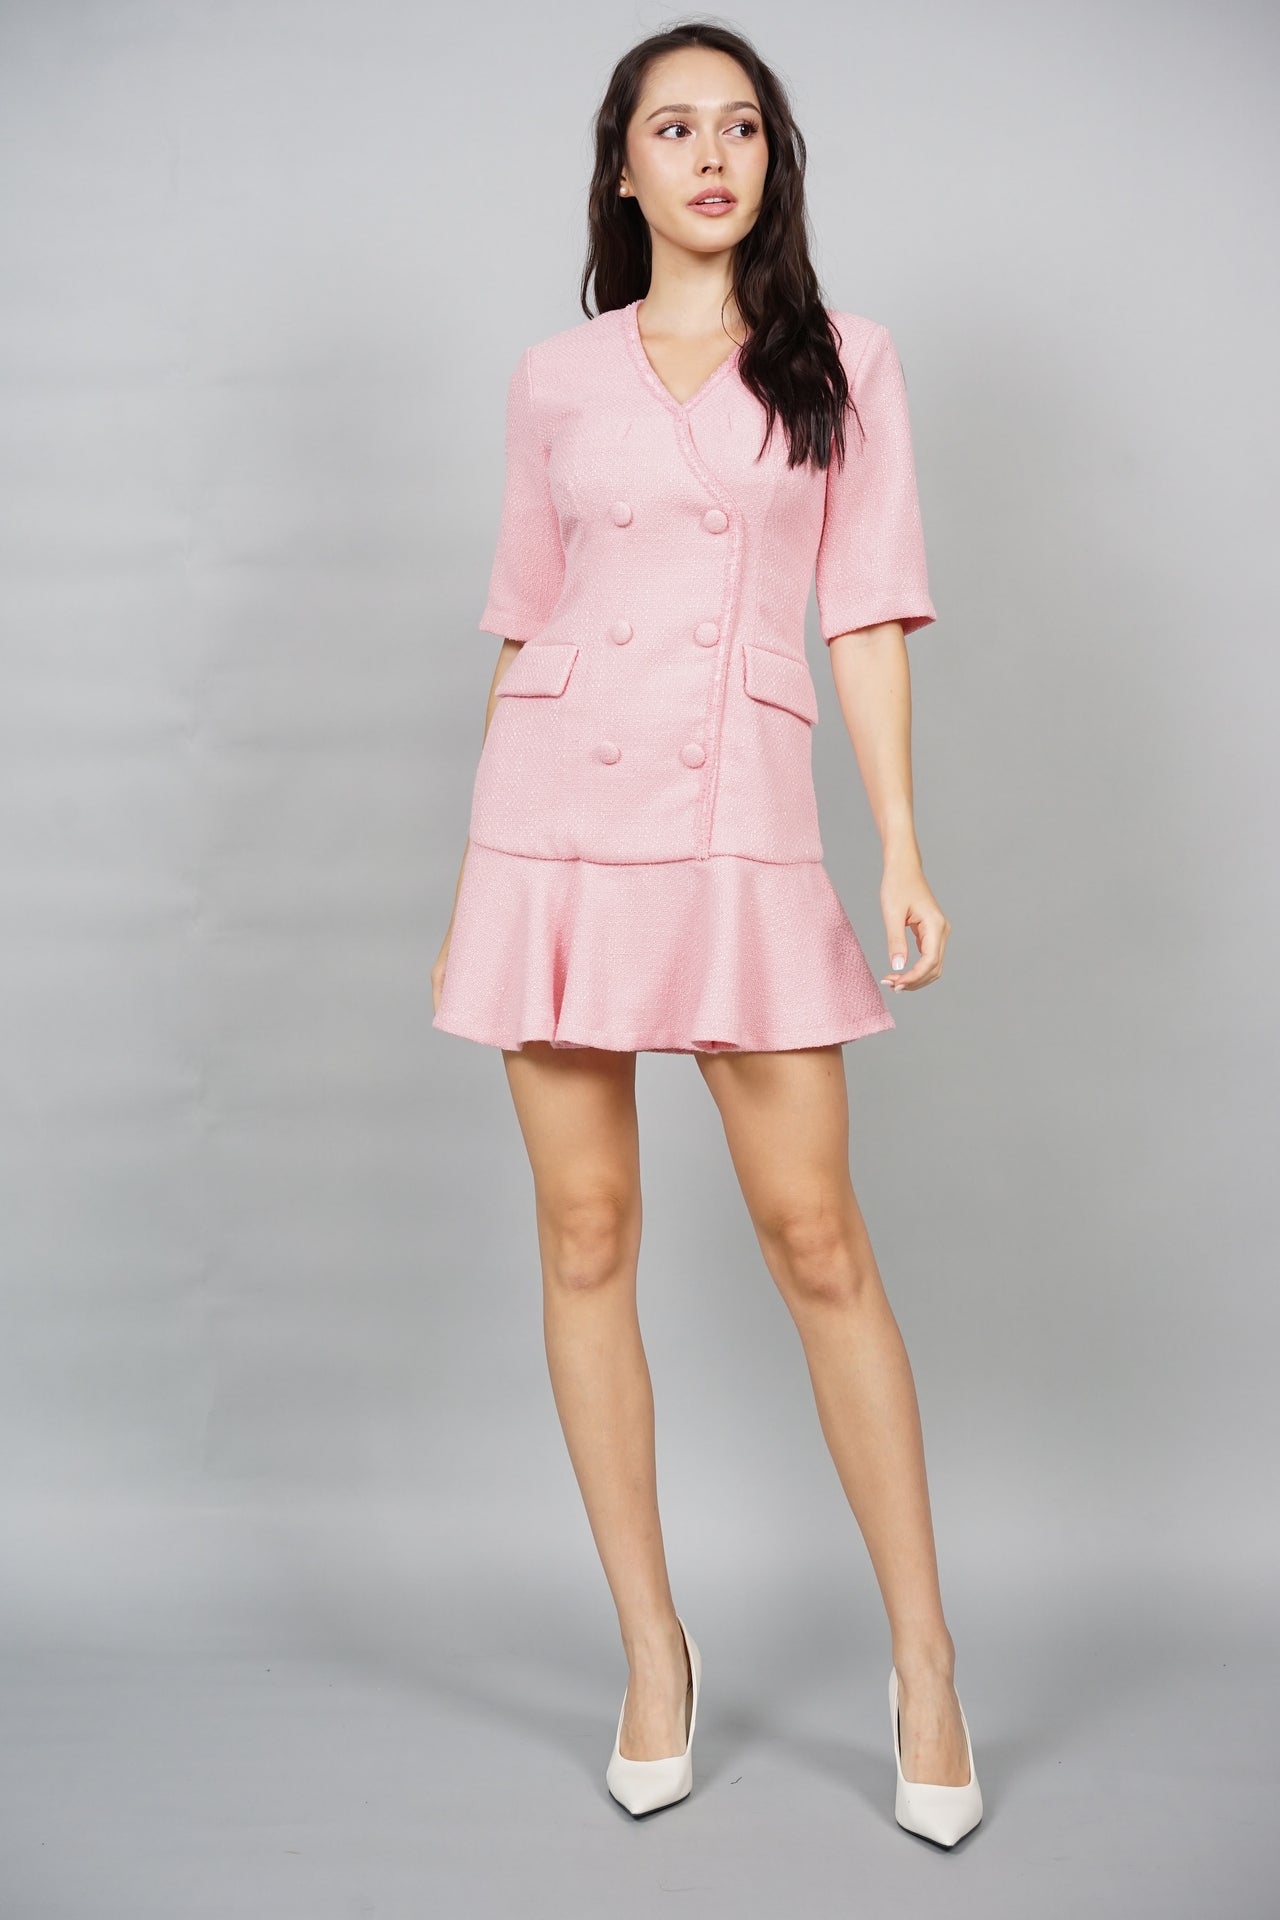 Blaire Tweed Dress in Pink